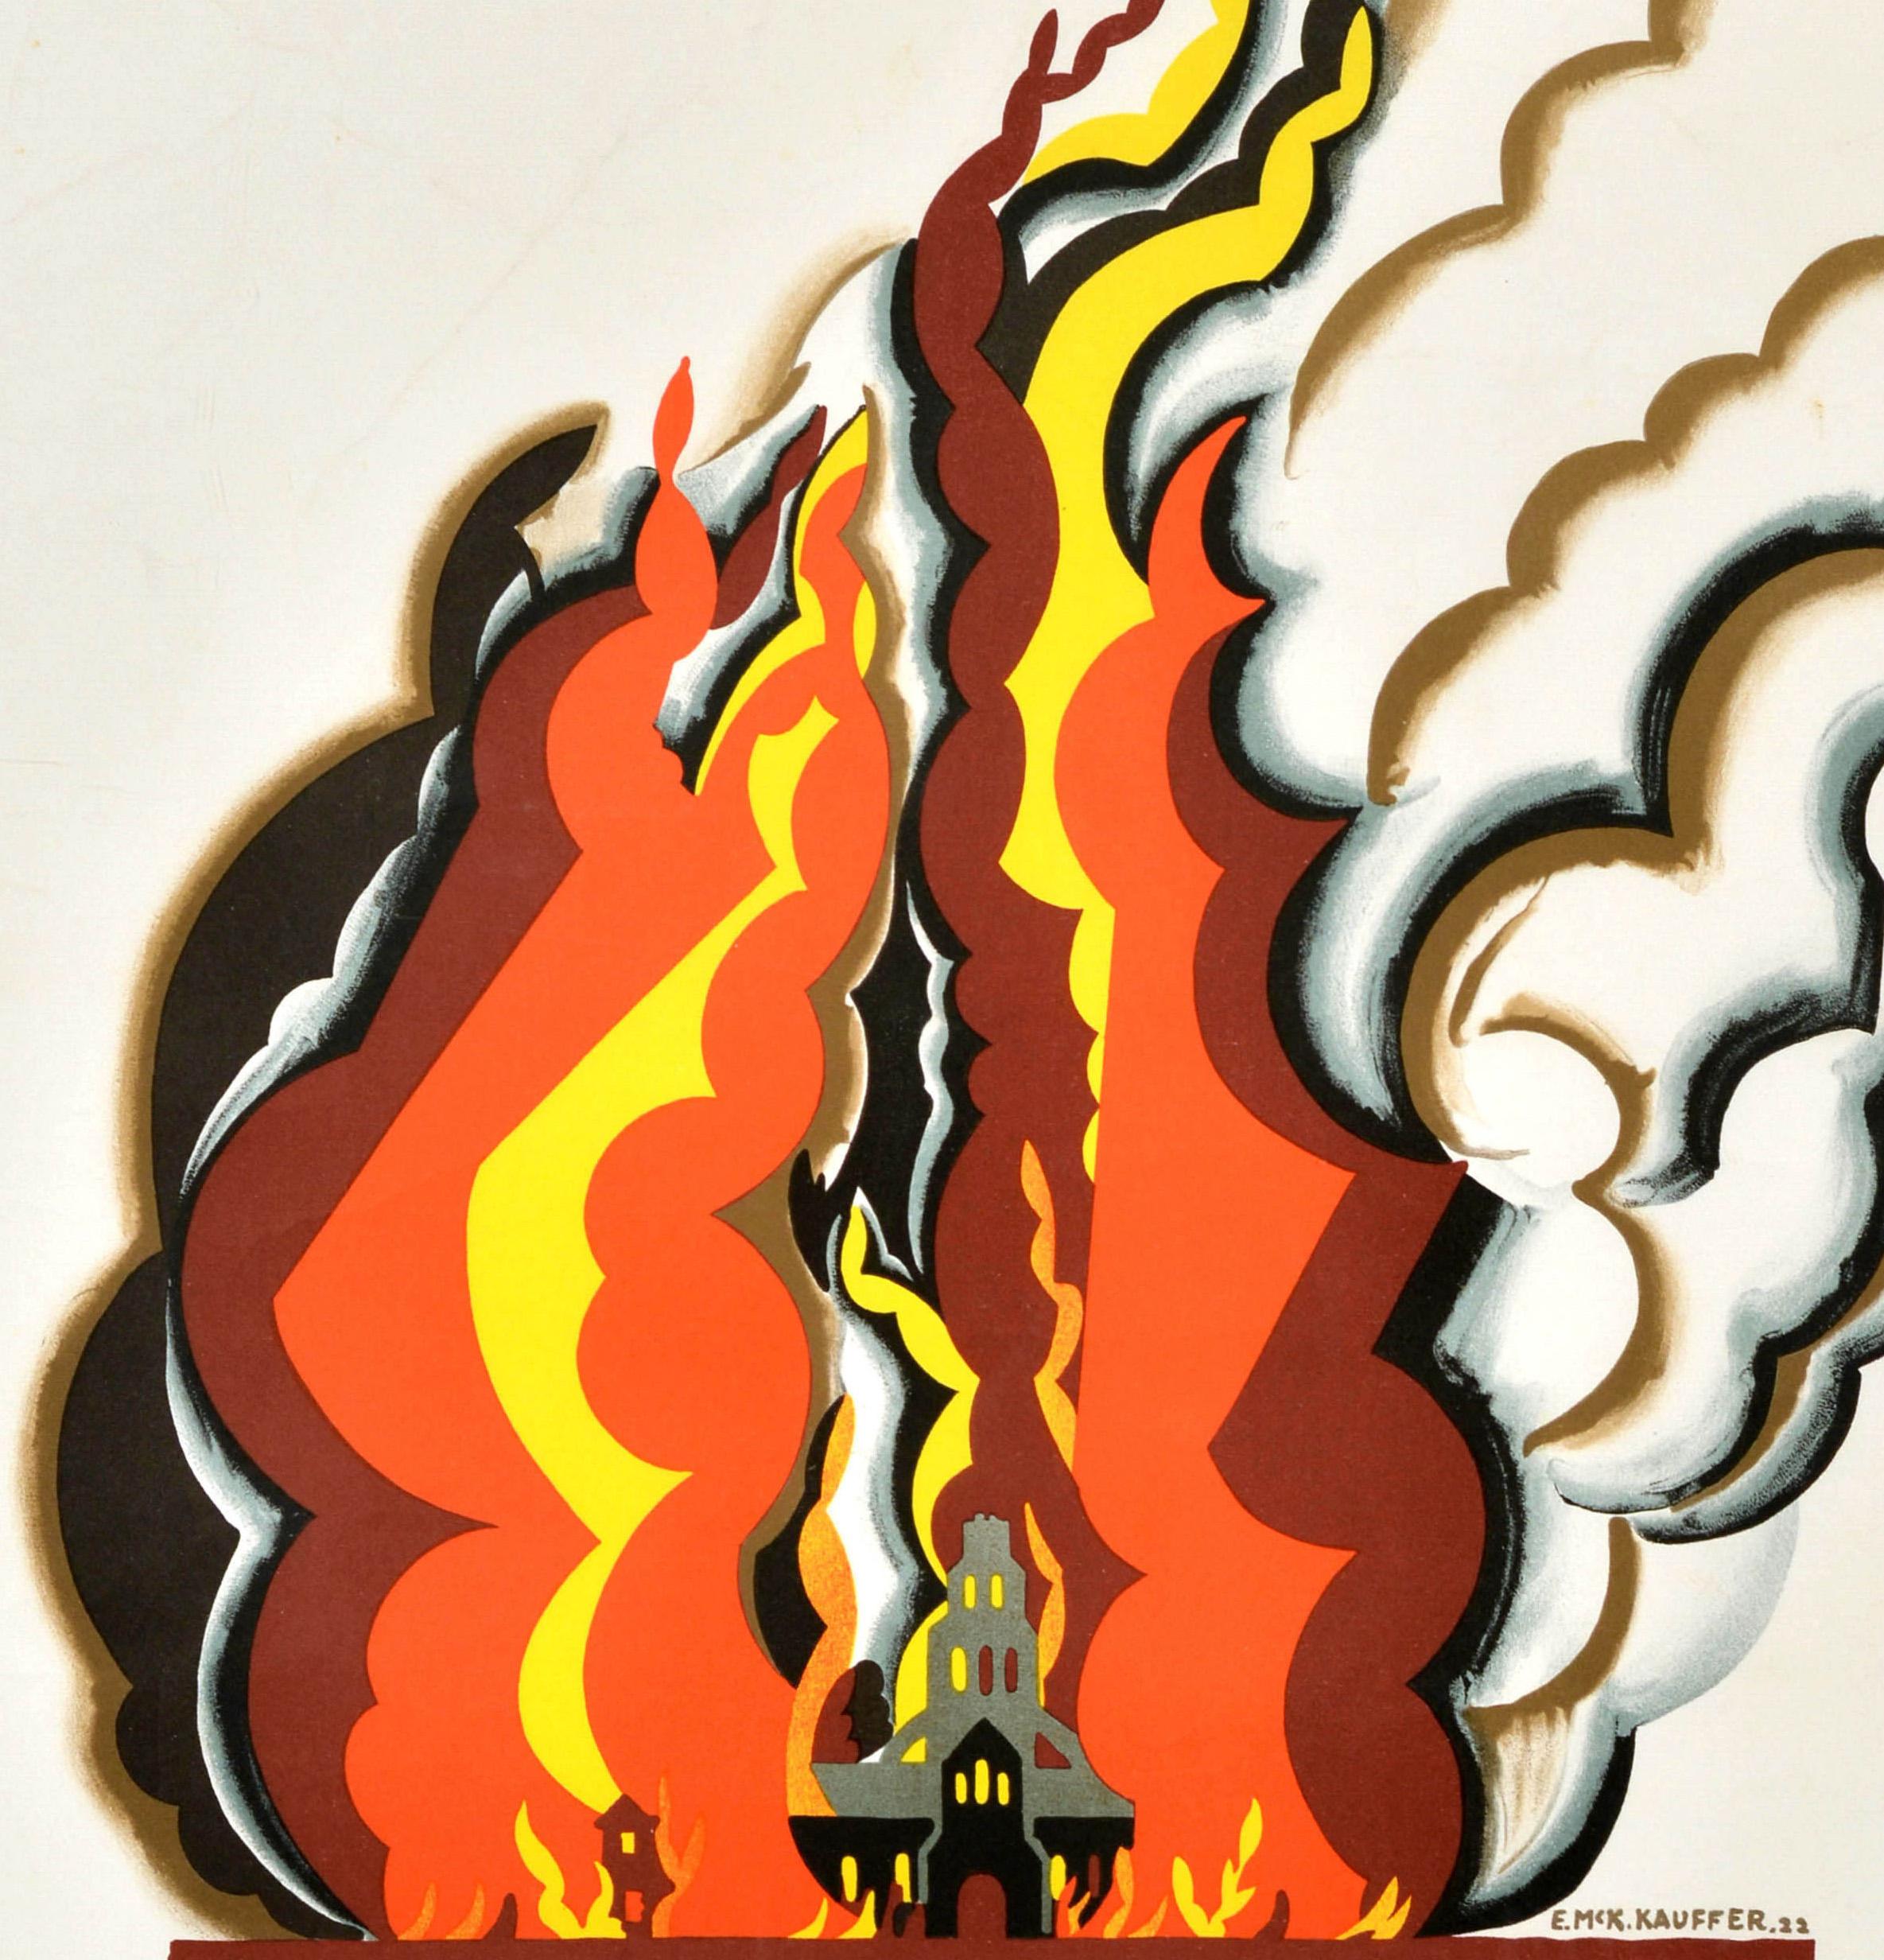 Vintage offizielles Reproduktionsplakat „Great Fire Of London Transport Kauffer“, Vintage – Print von Edward McKnight Kauffer